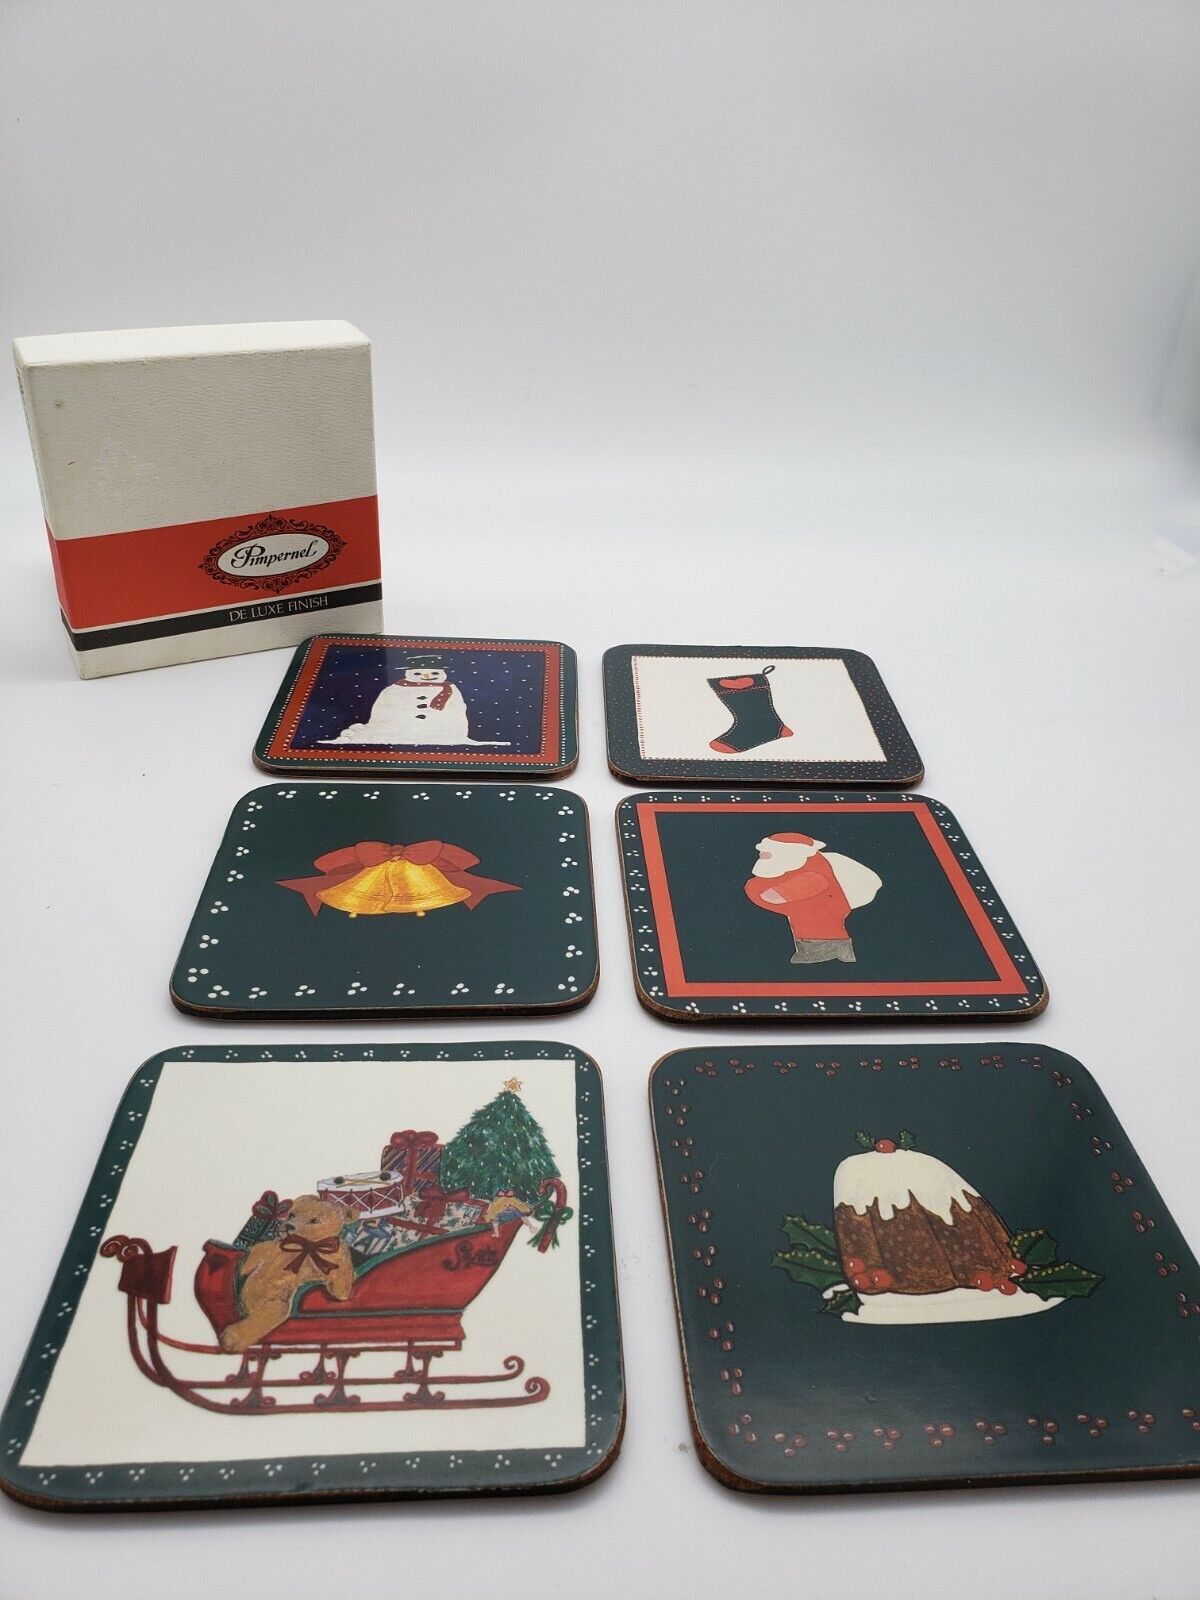 Vintage Pimpernel De Luxe Coaster Set of 6, Christmas Design, Original Box